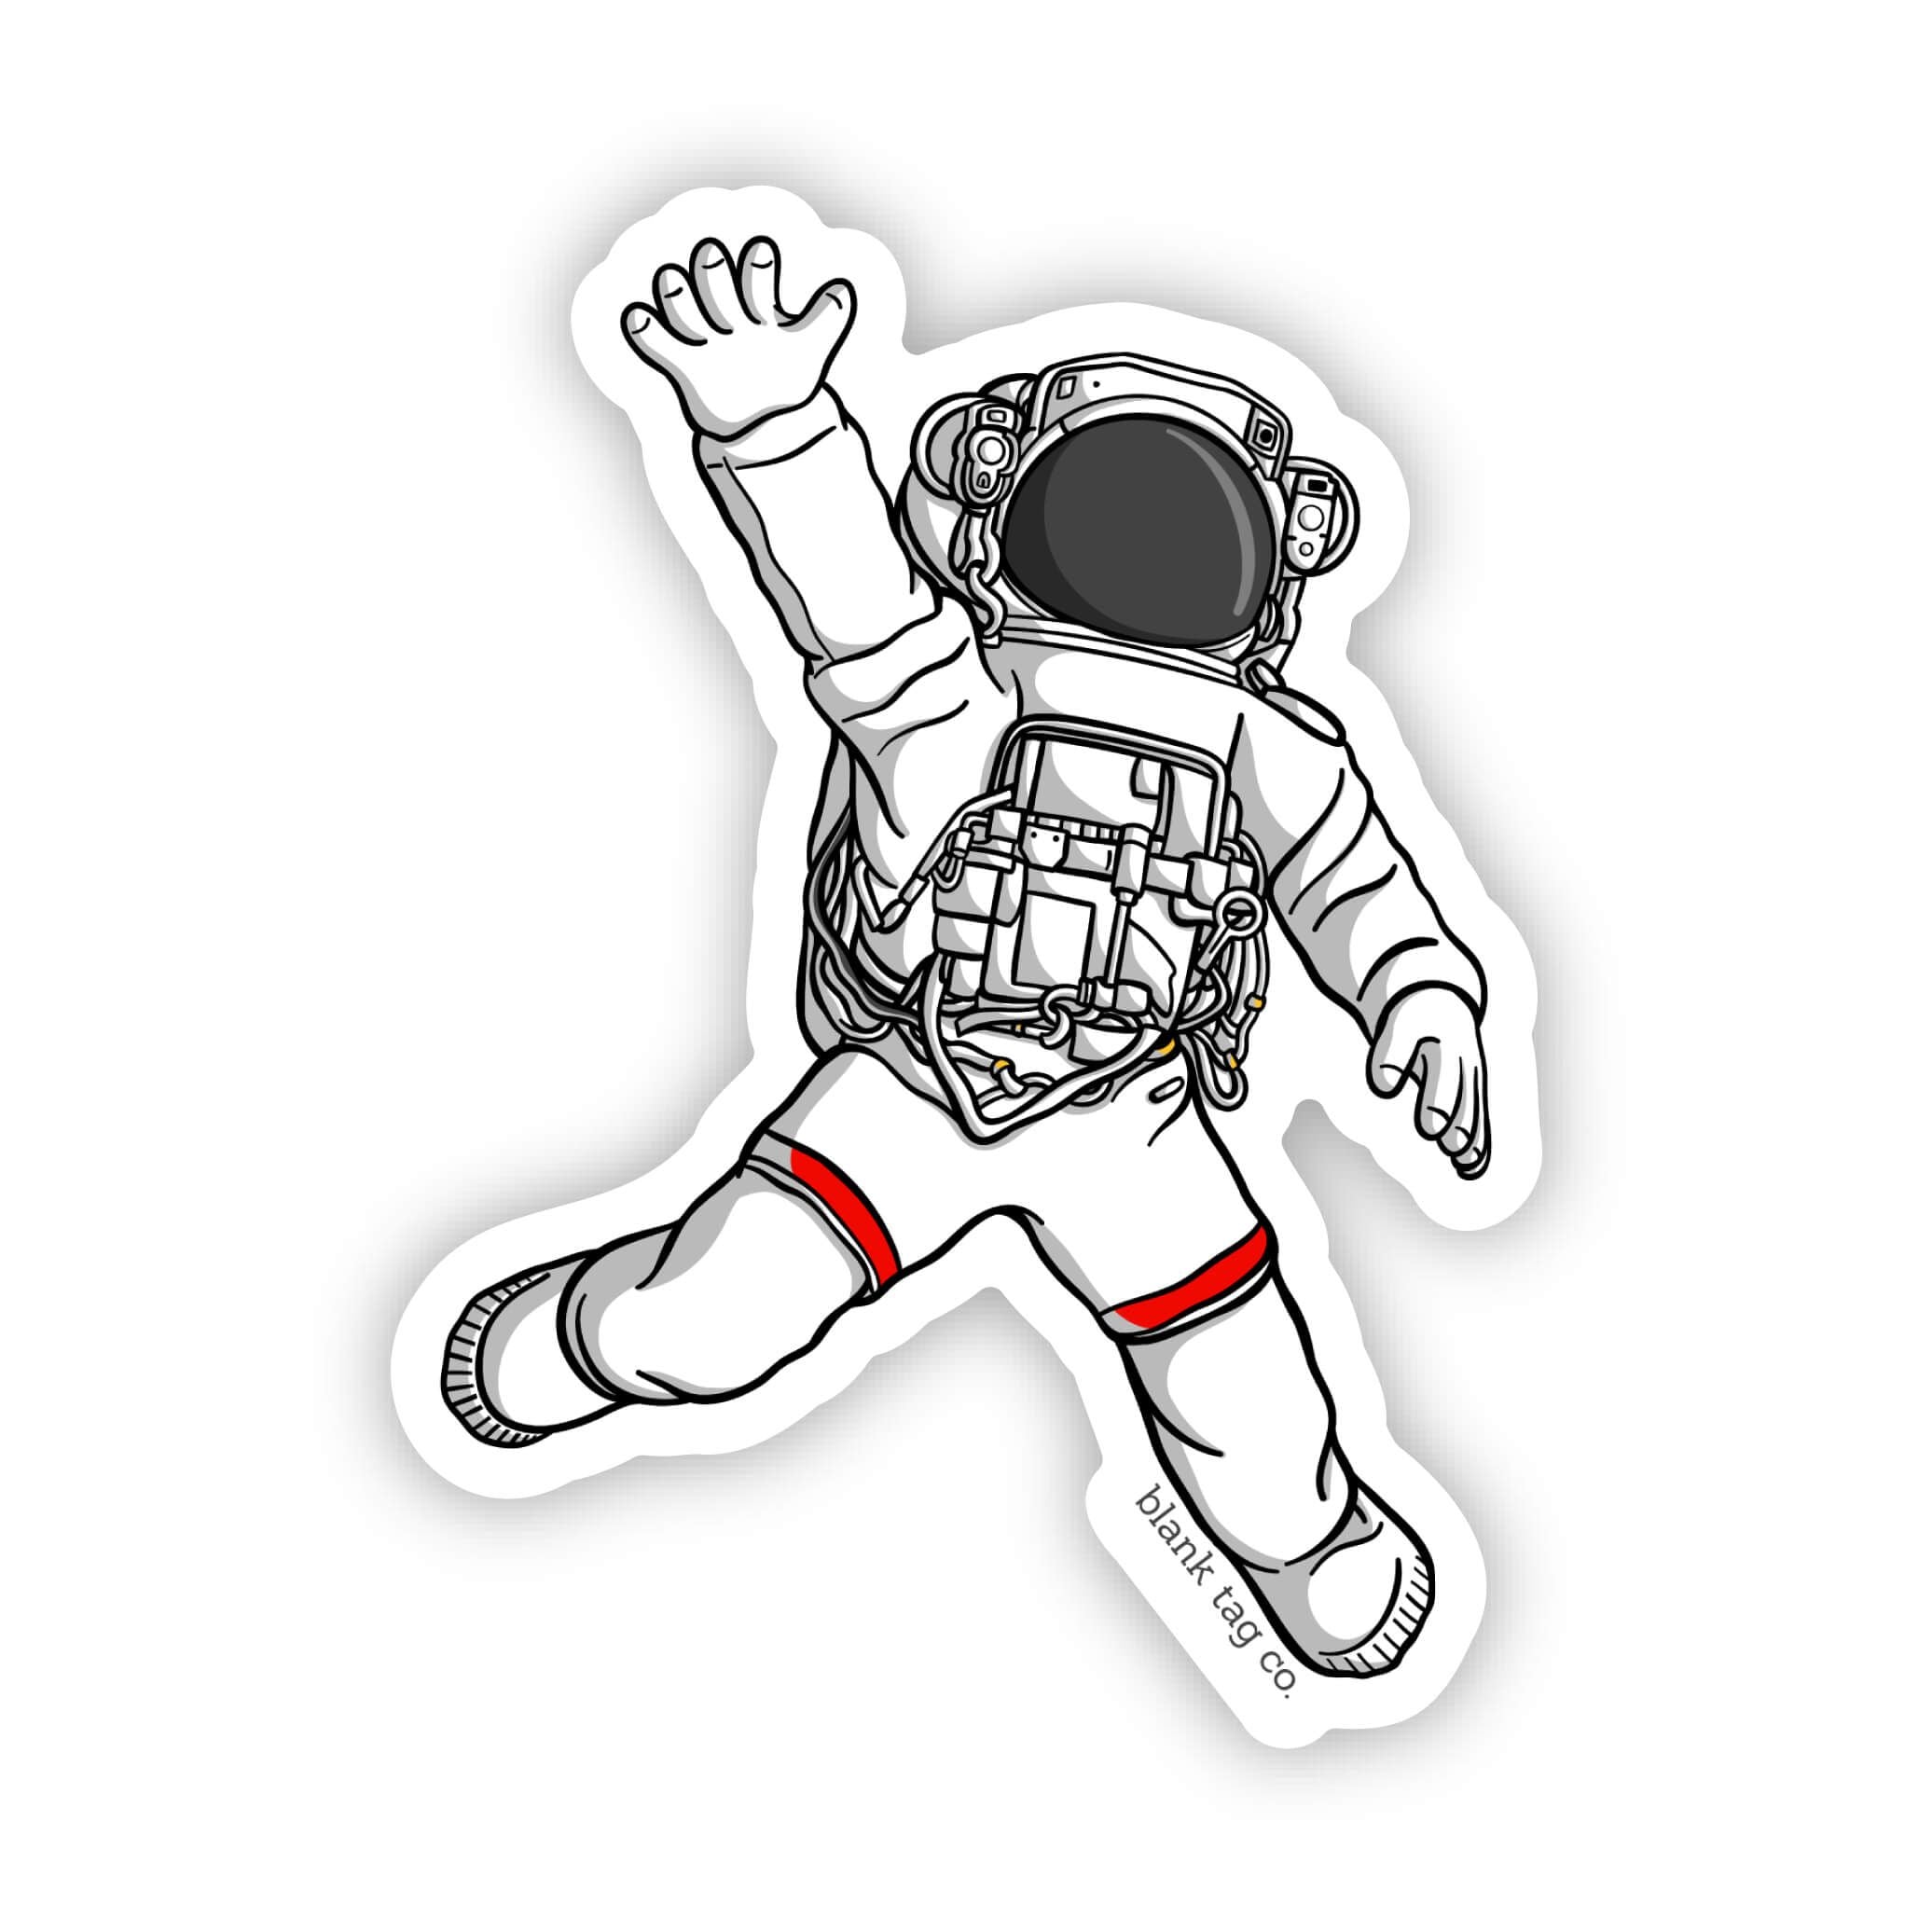 The Astronaut Sticker